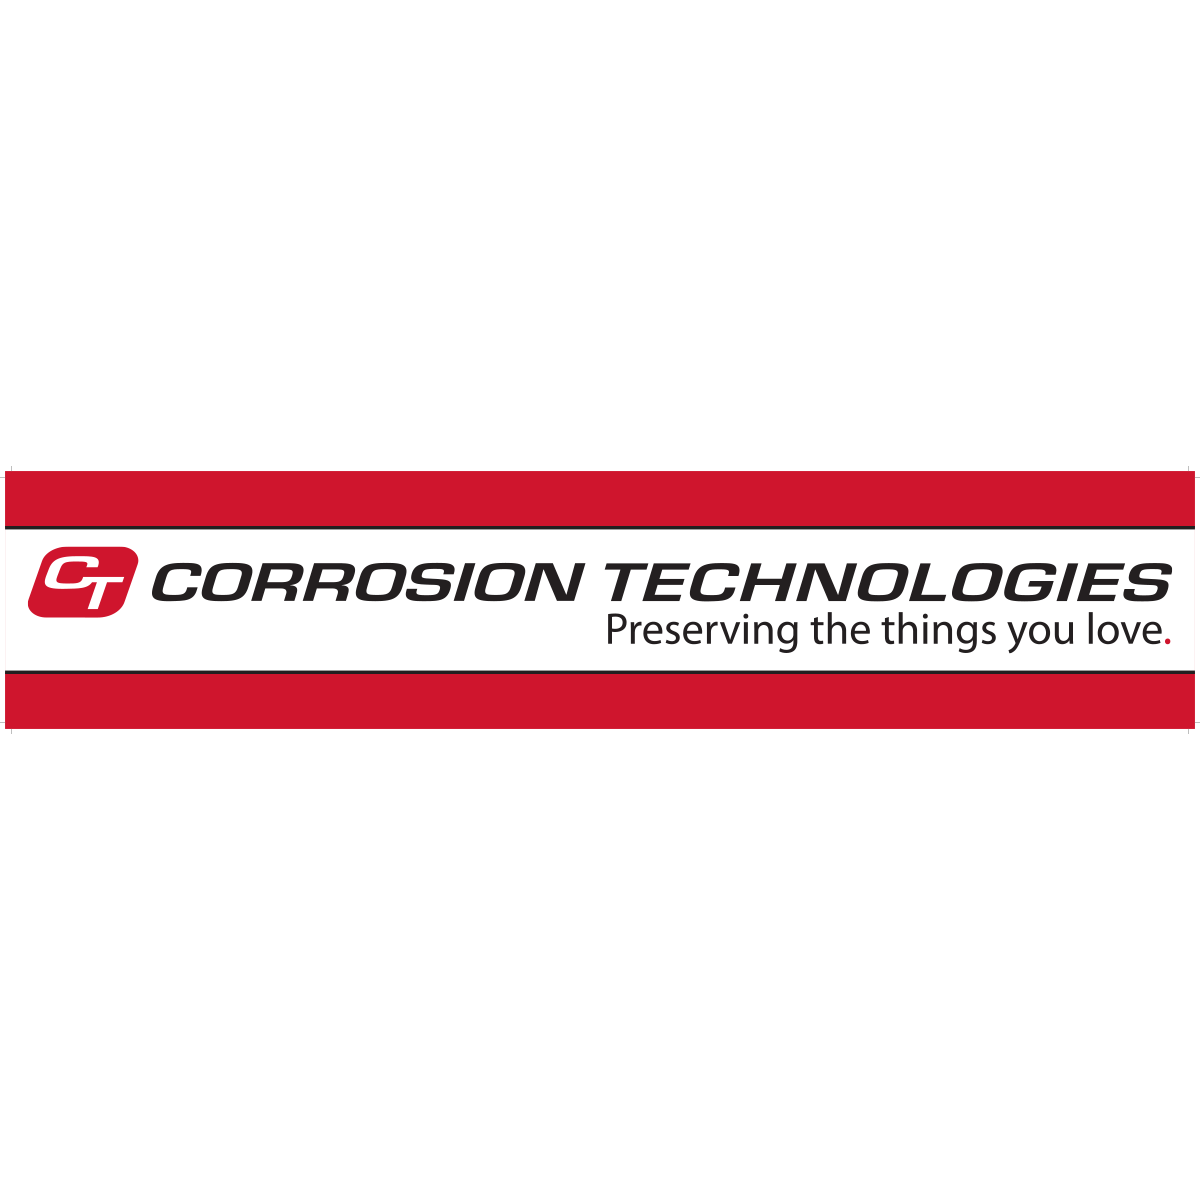 Corrosion Technologies retail shelf header card